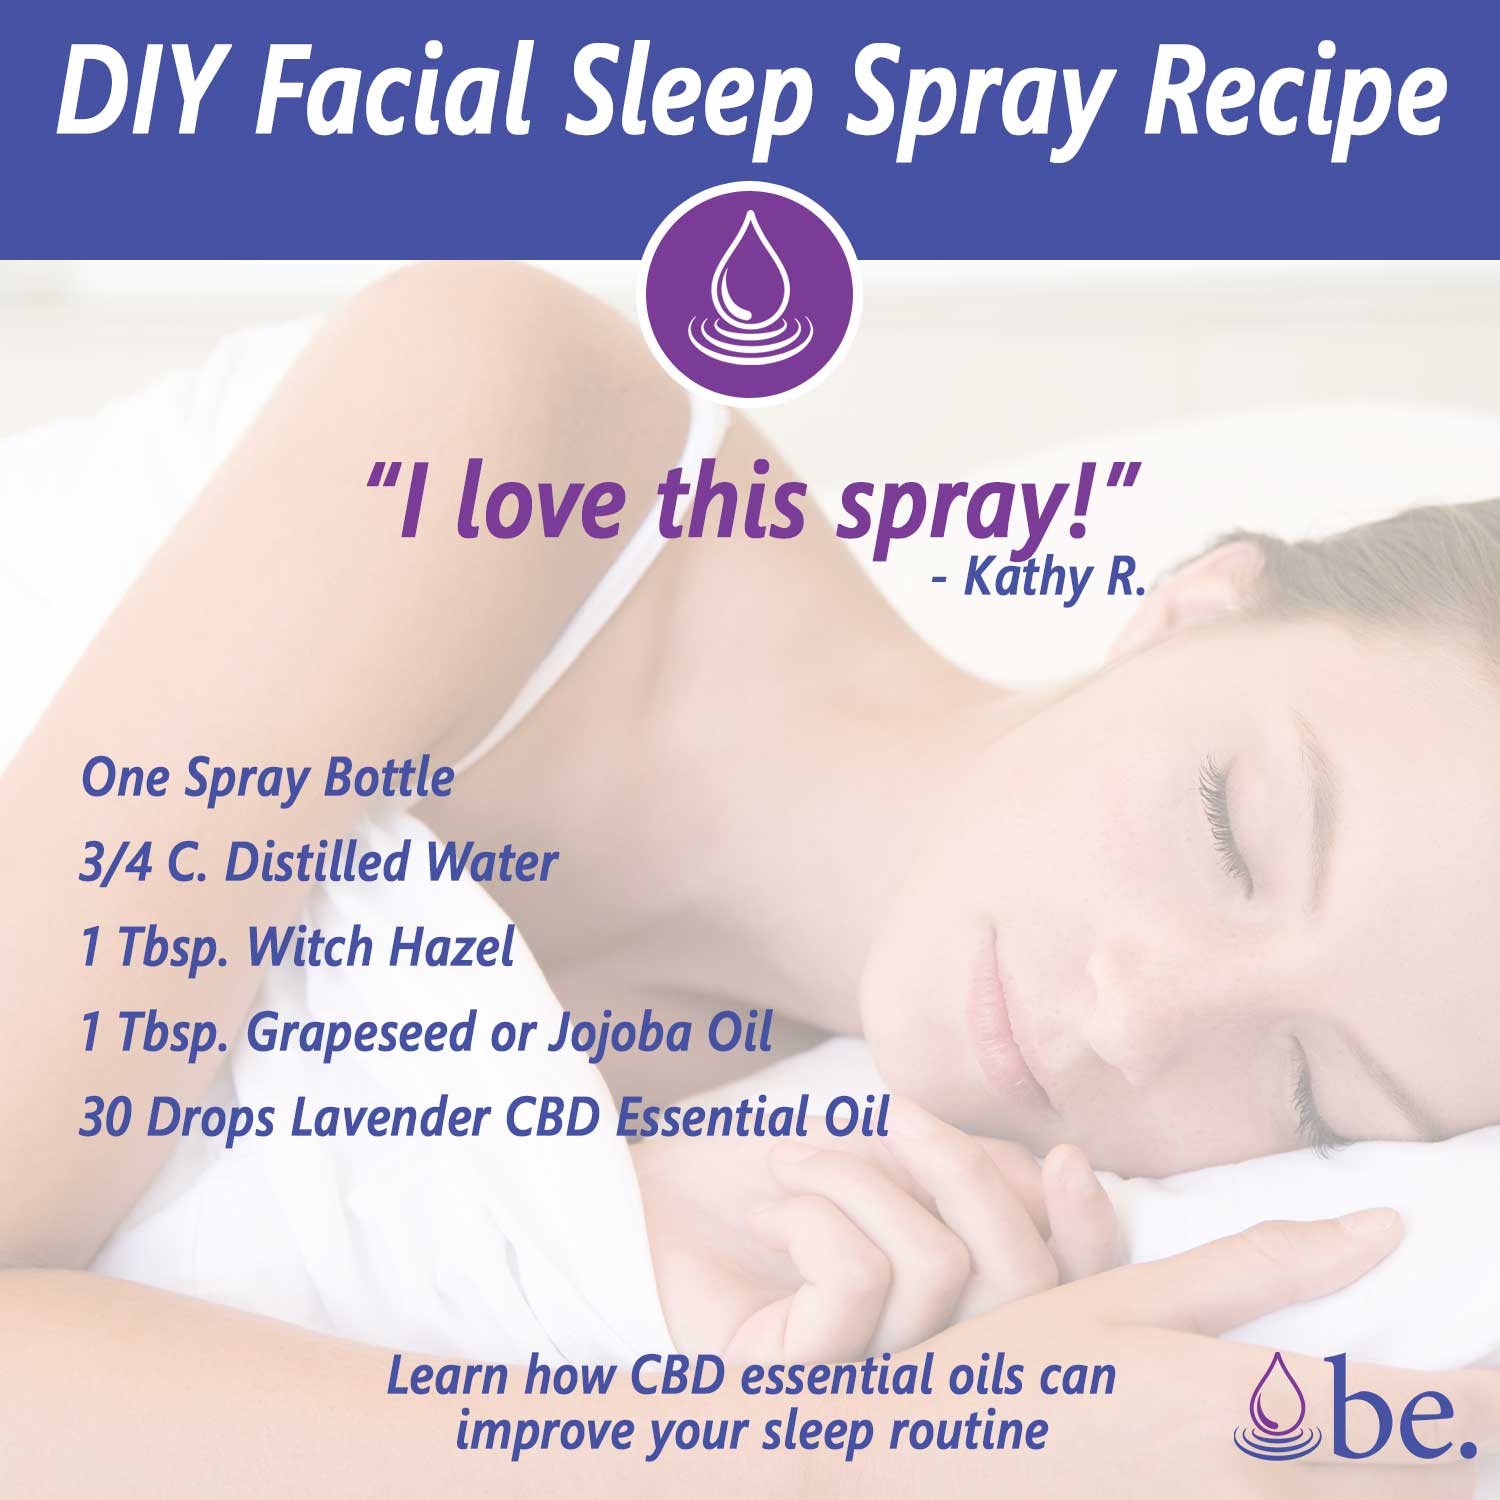 DIY Essential Oil Sleep Facial Spray Recipe with CBD